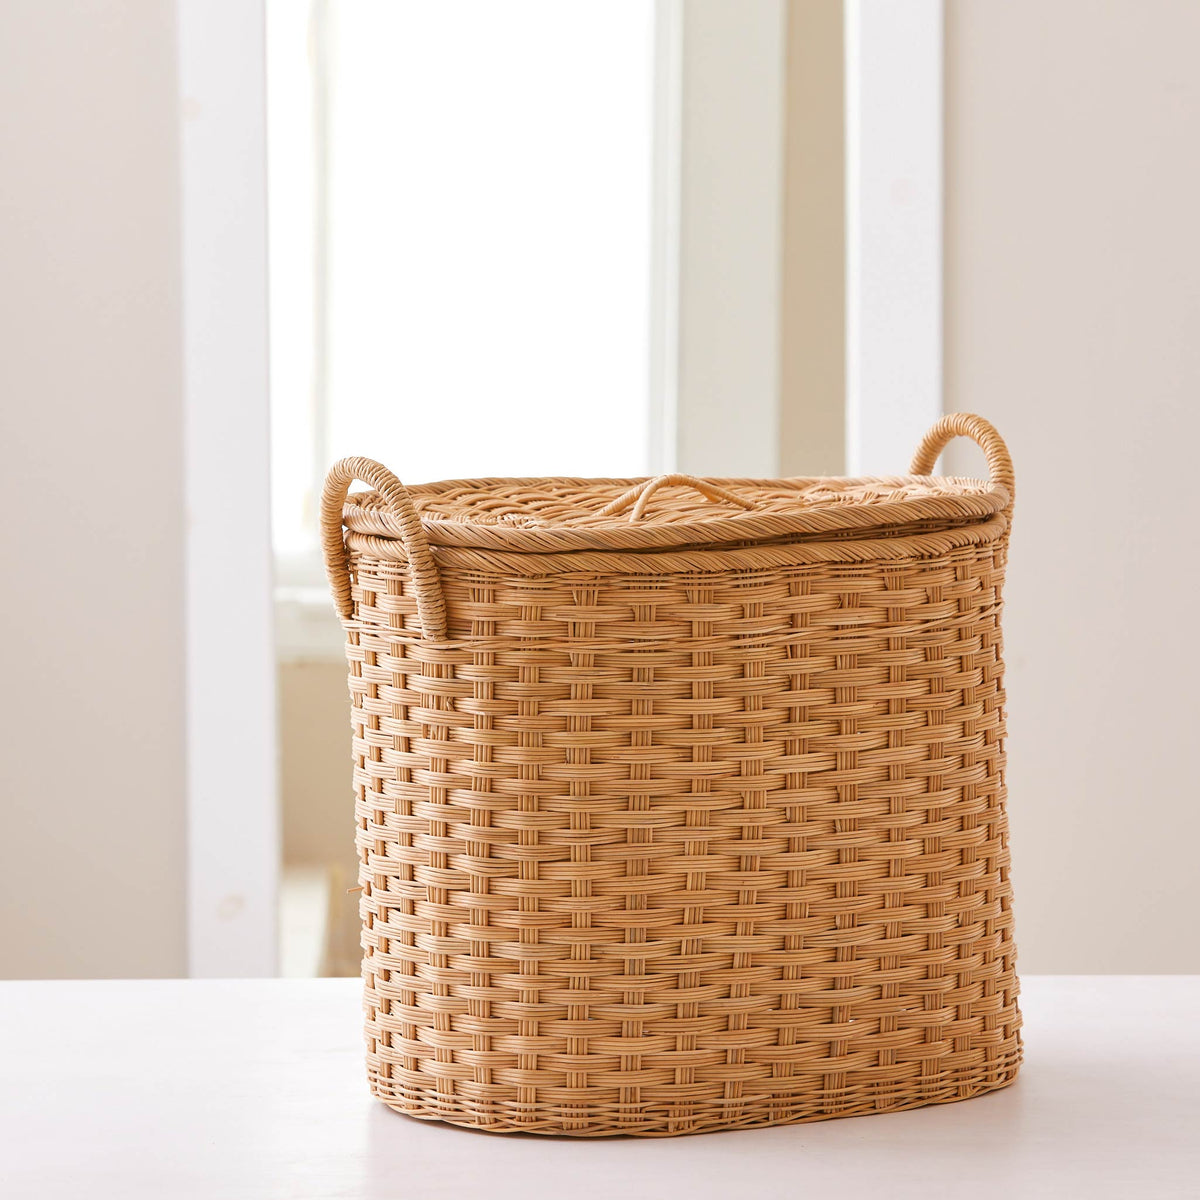 Oval rattan storage basket. Unique storage baskets with lids and handles. 5 sizes. Medium basket shown. Great basket for storage. XL, L, M, S, XS.